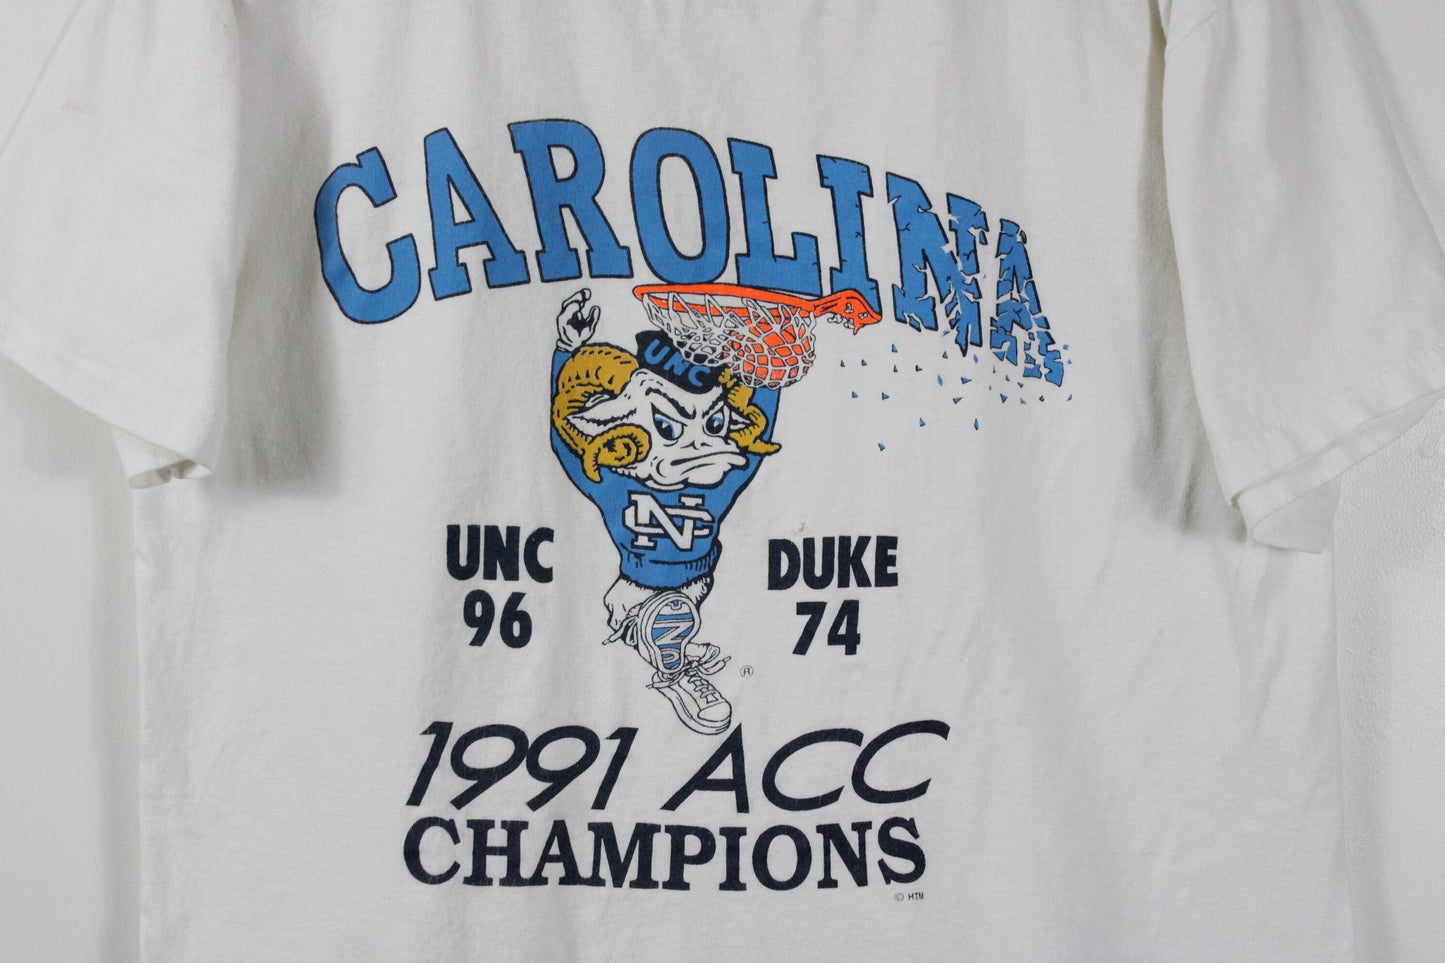 Carolina-State-Tar-Heels T-Shirt / Vintage UNC NCAA Graphic Tee Shirt / 90s / 2000s Sports-Team Clothing